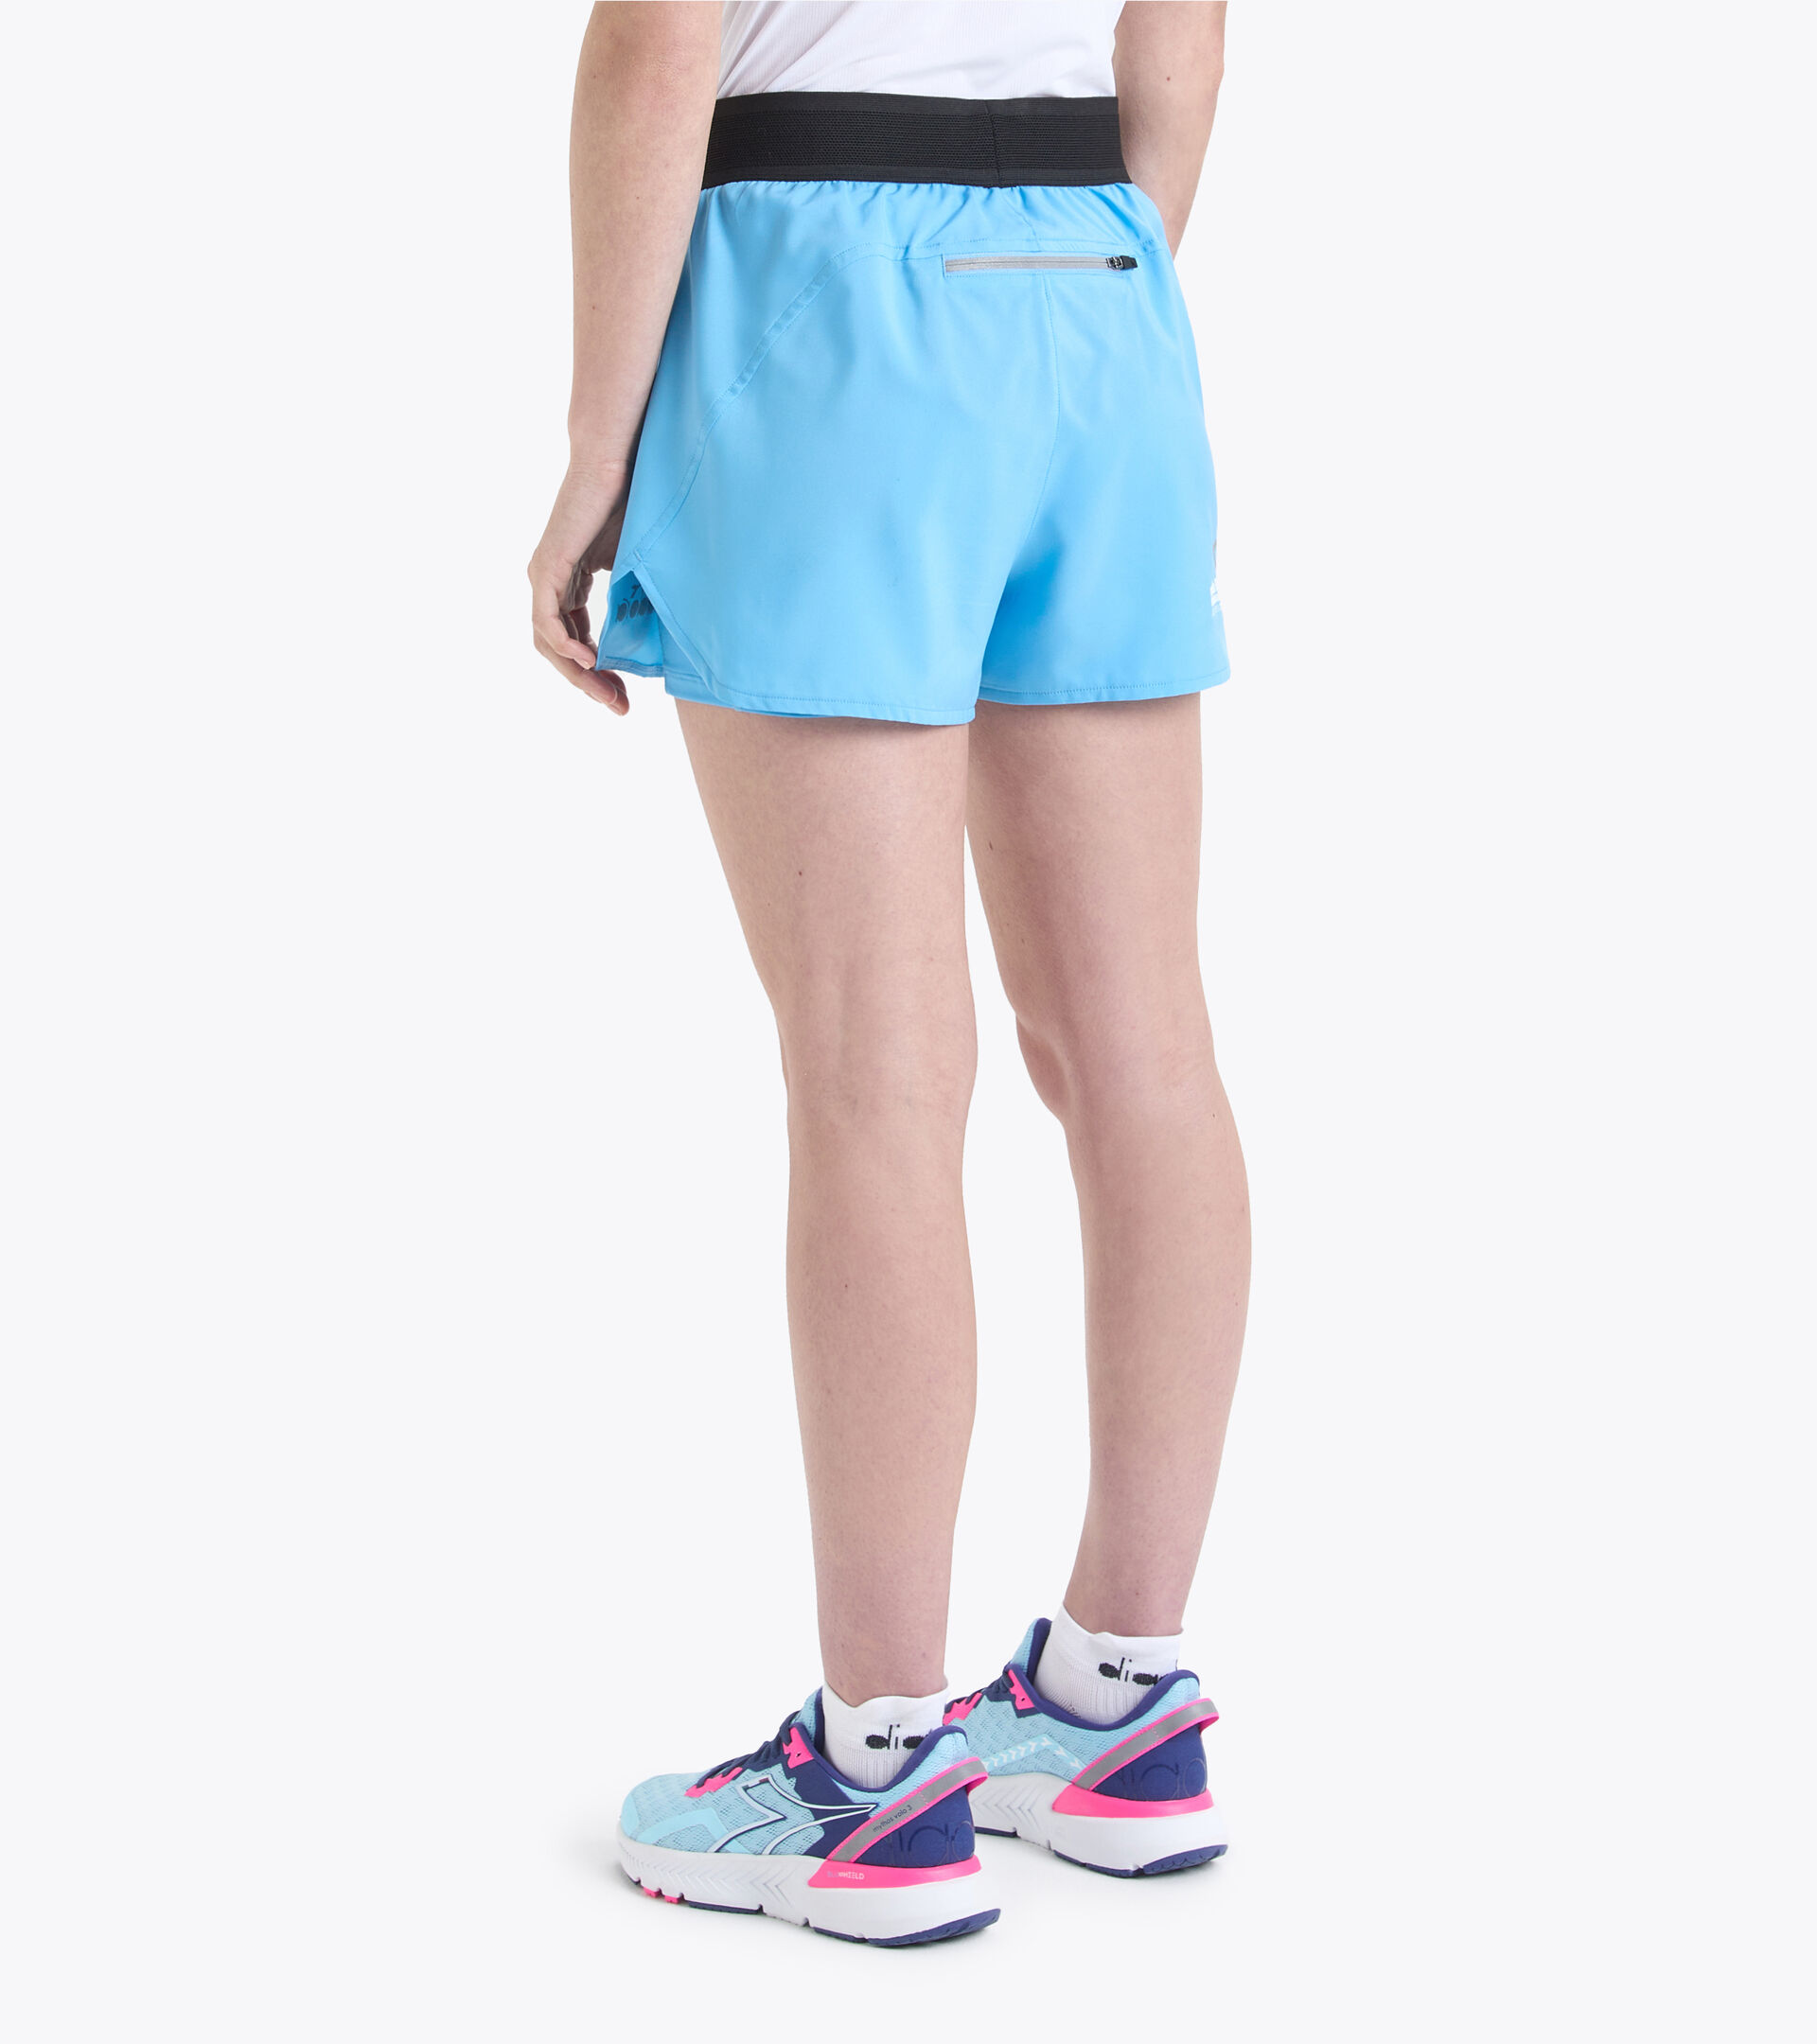 L. DOUBLE LAYER SHORTS BE ONE Running shorts - Women - Diadora